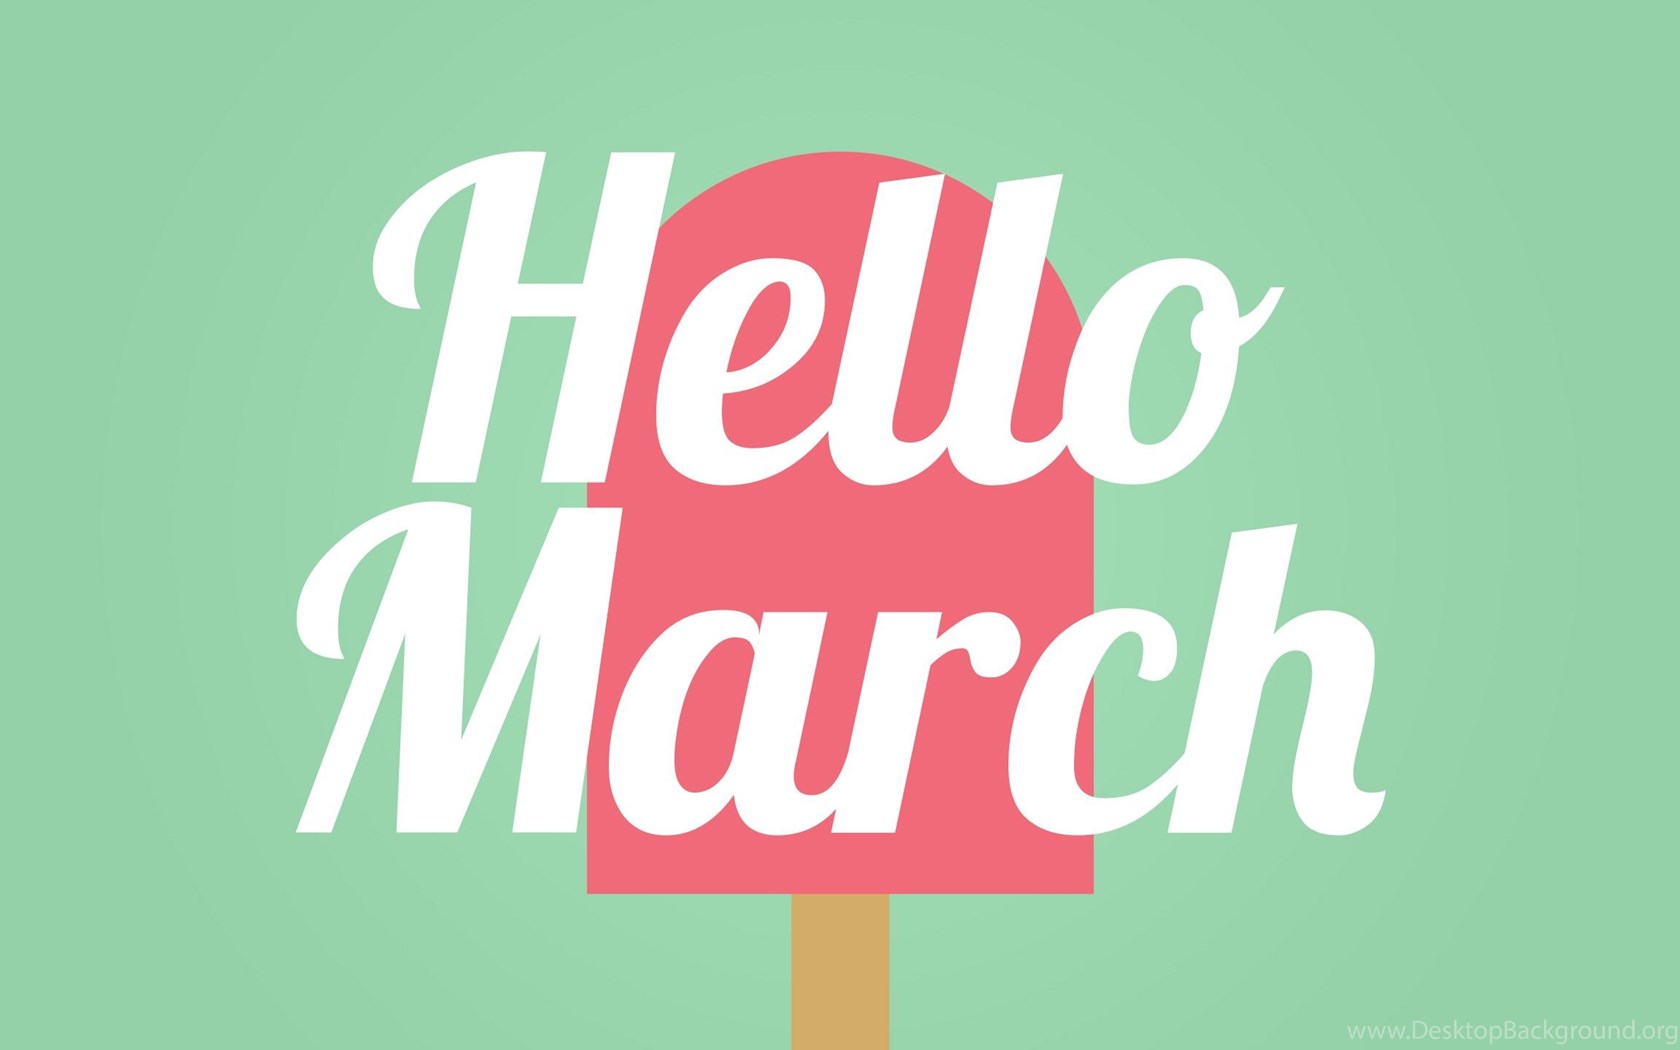 Правильно hello. March надпись. Надпись hello March. Hello March картинки. Hello March картинки на рабочий стол.